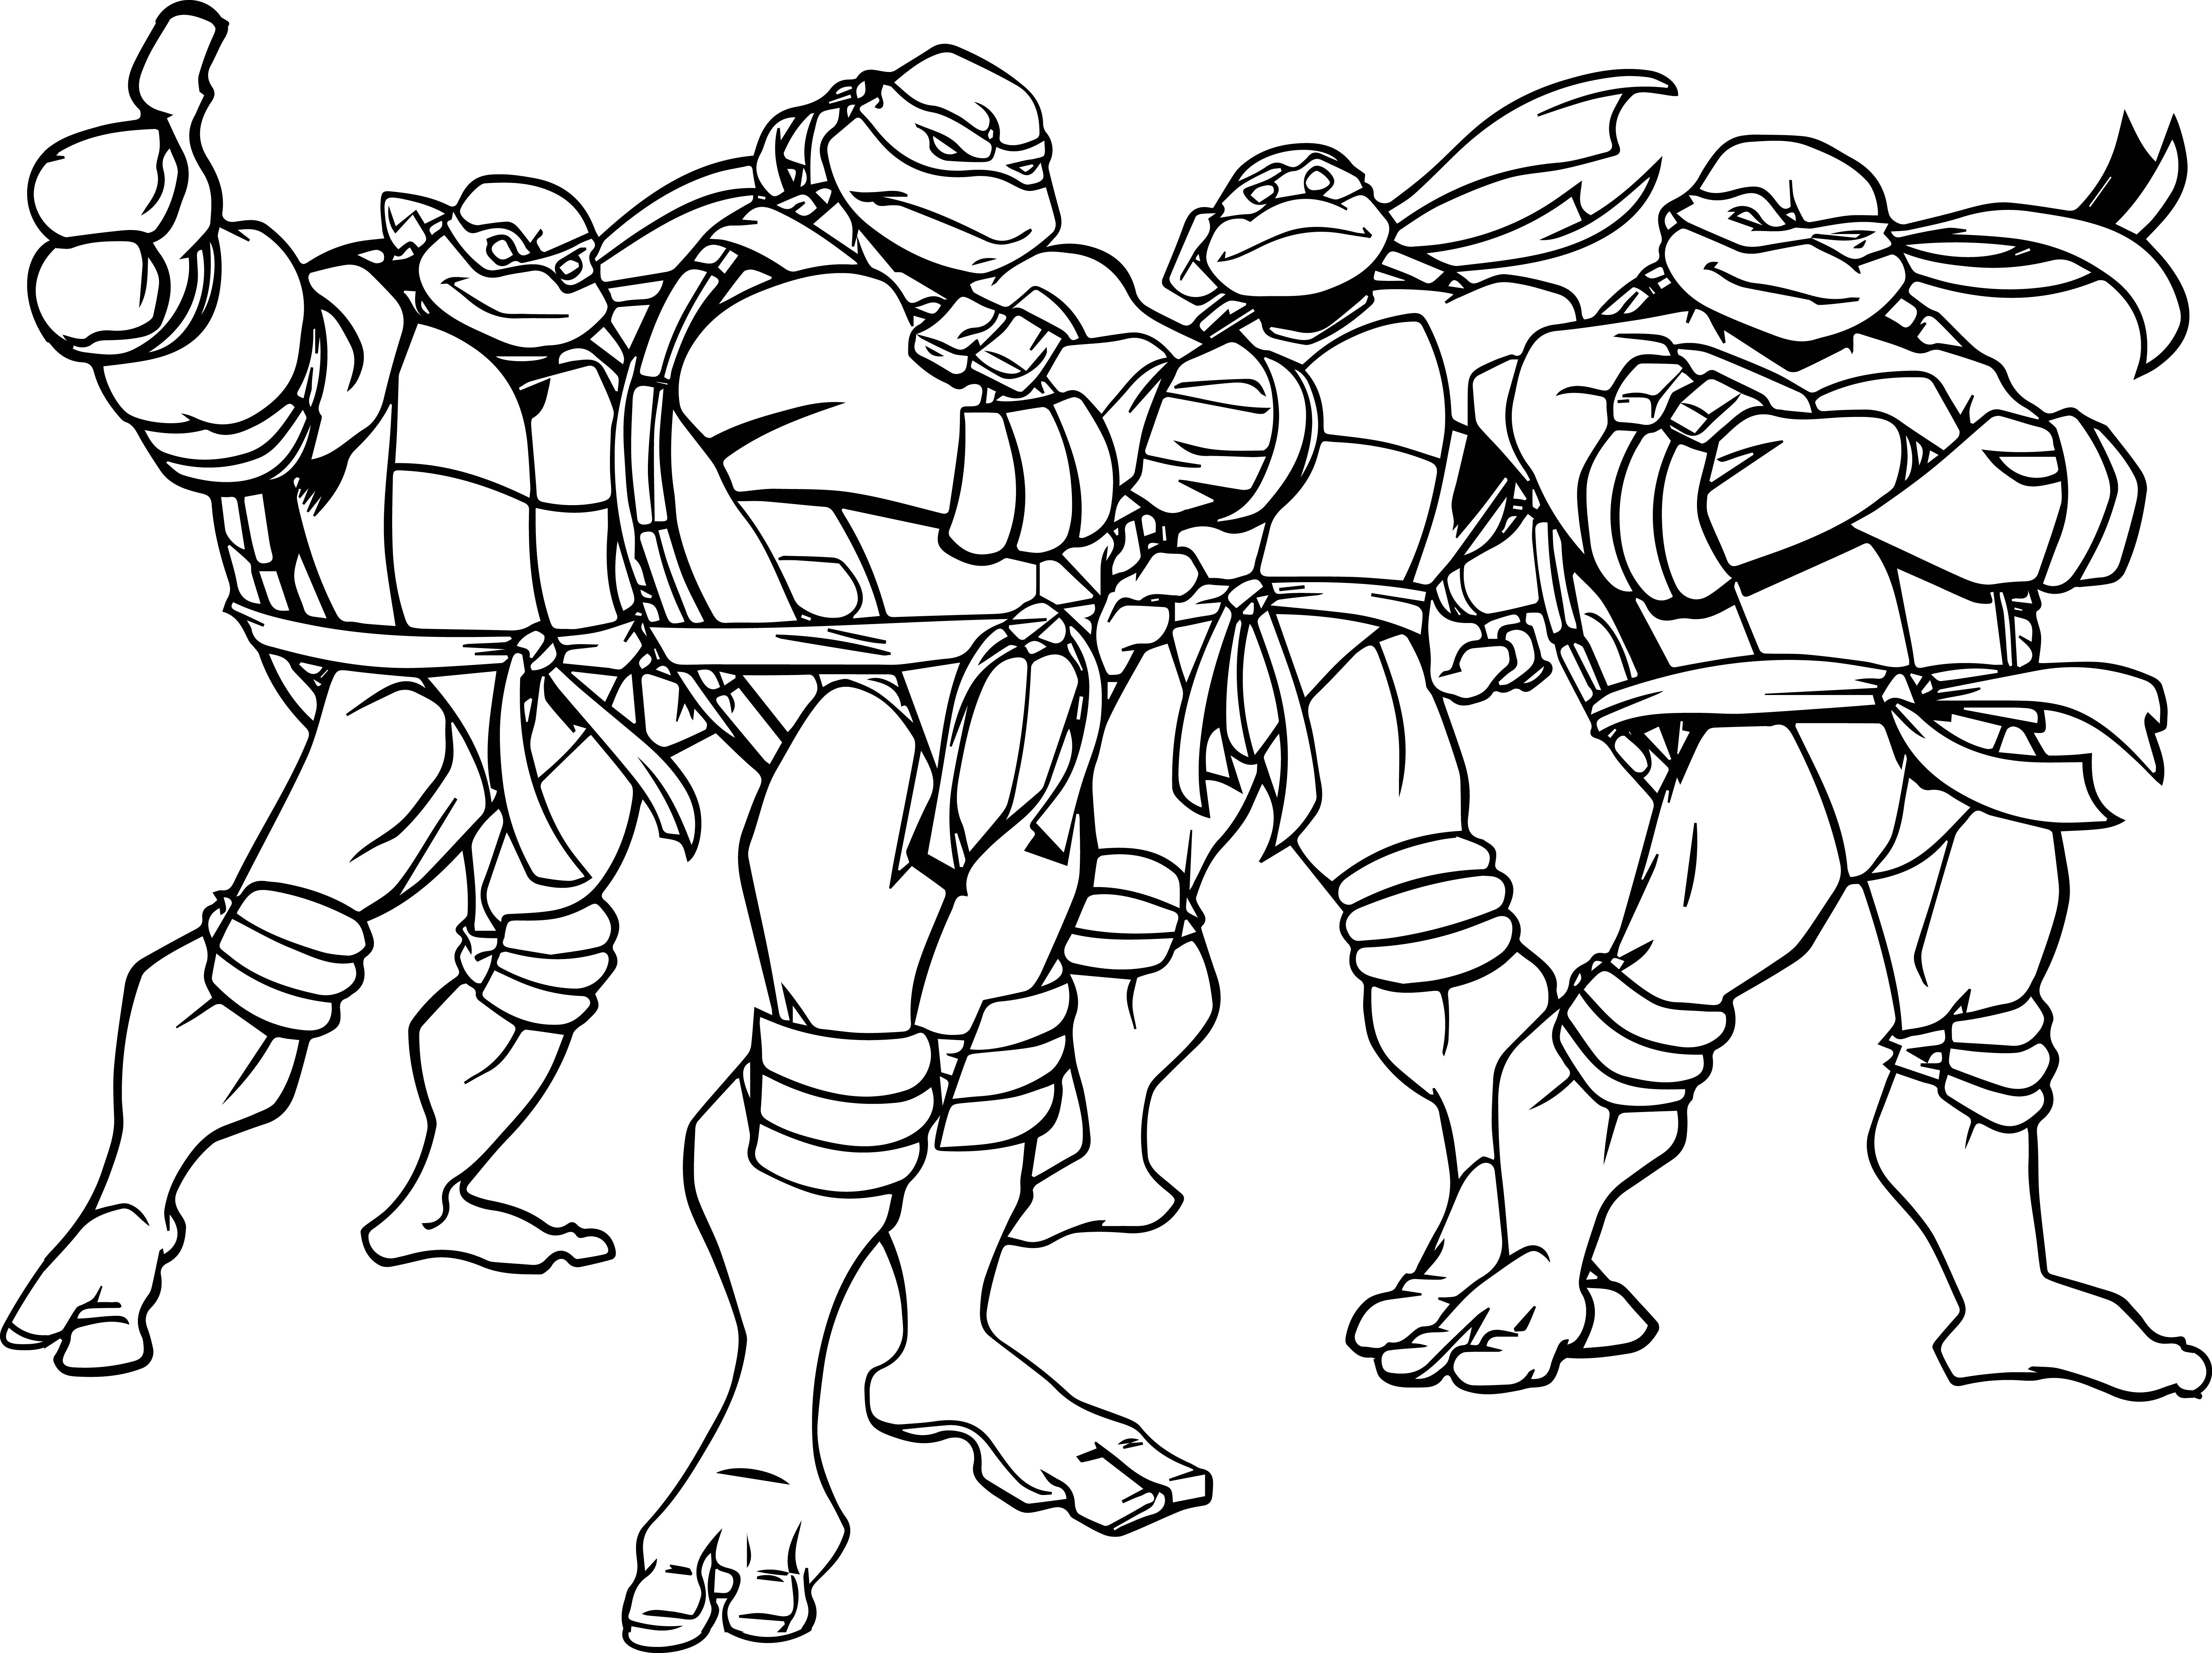 Donatello Ninja Turtle Drawing at GetDrawings | Free download